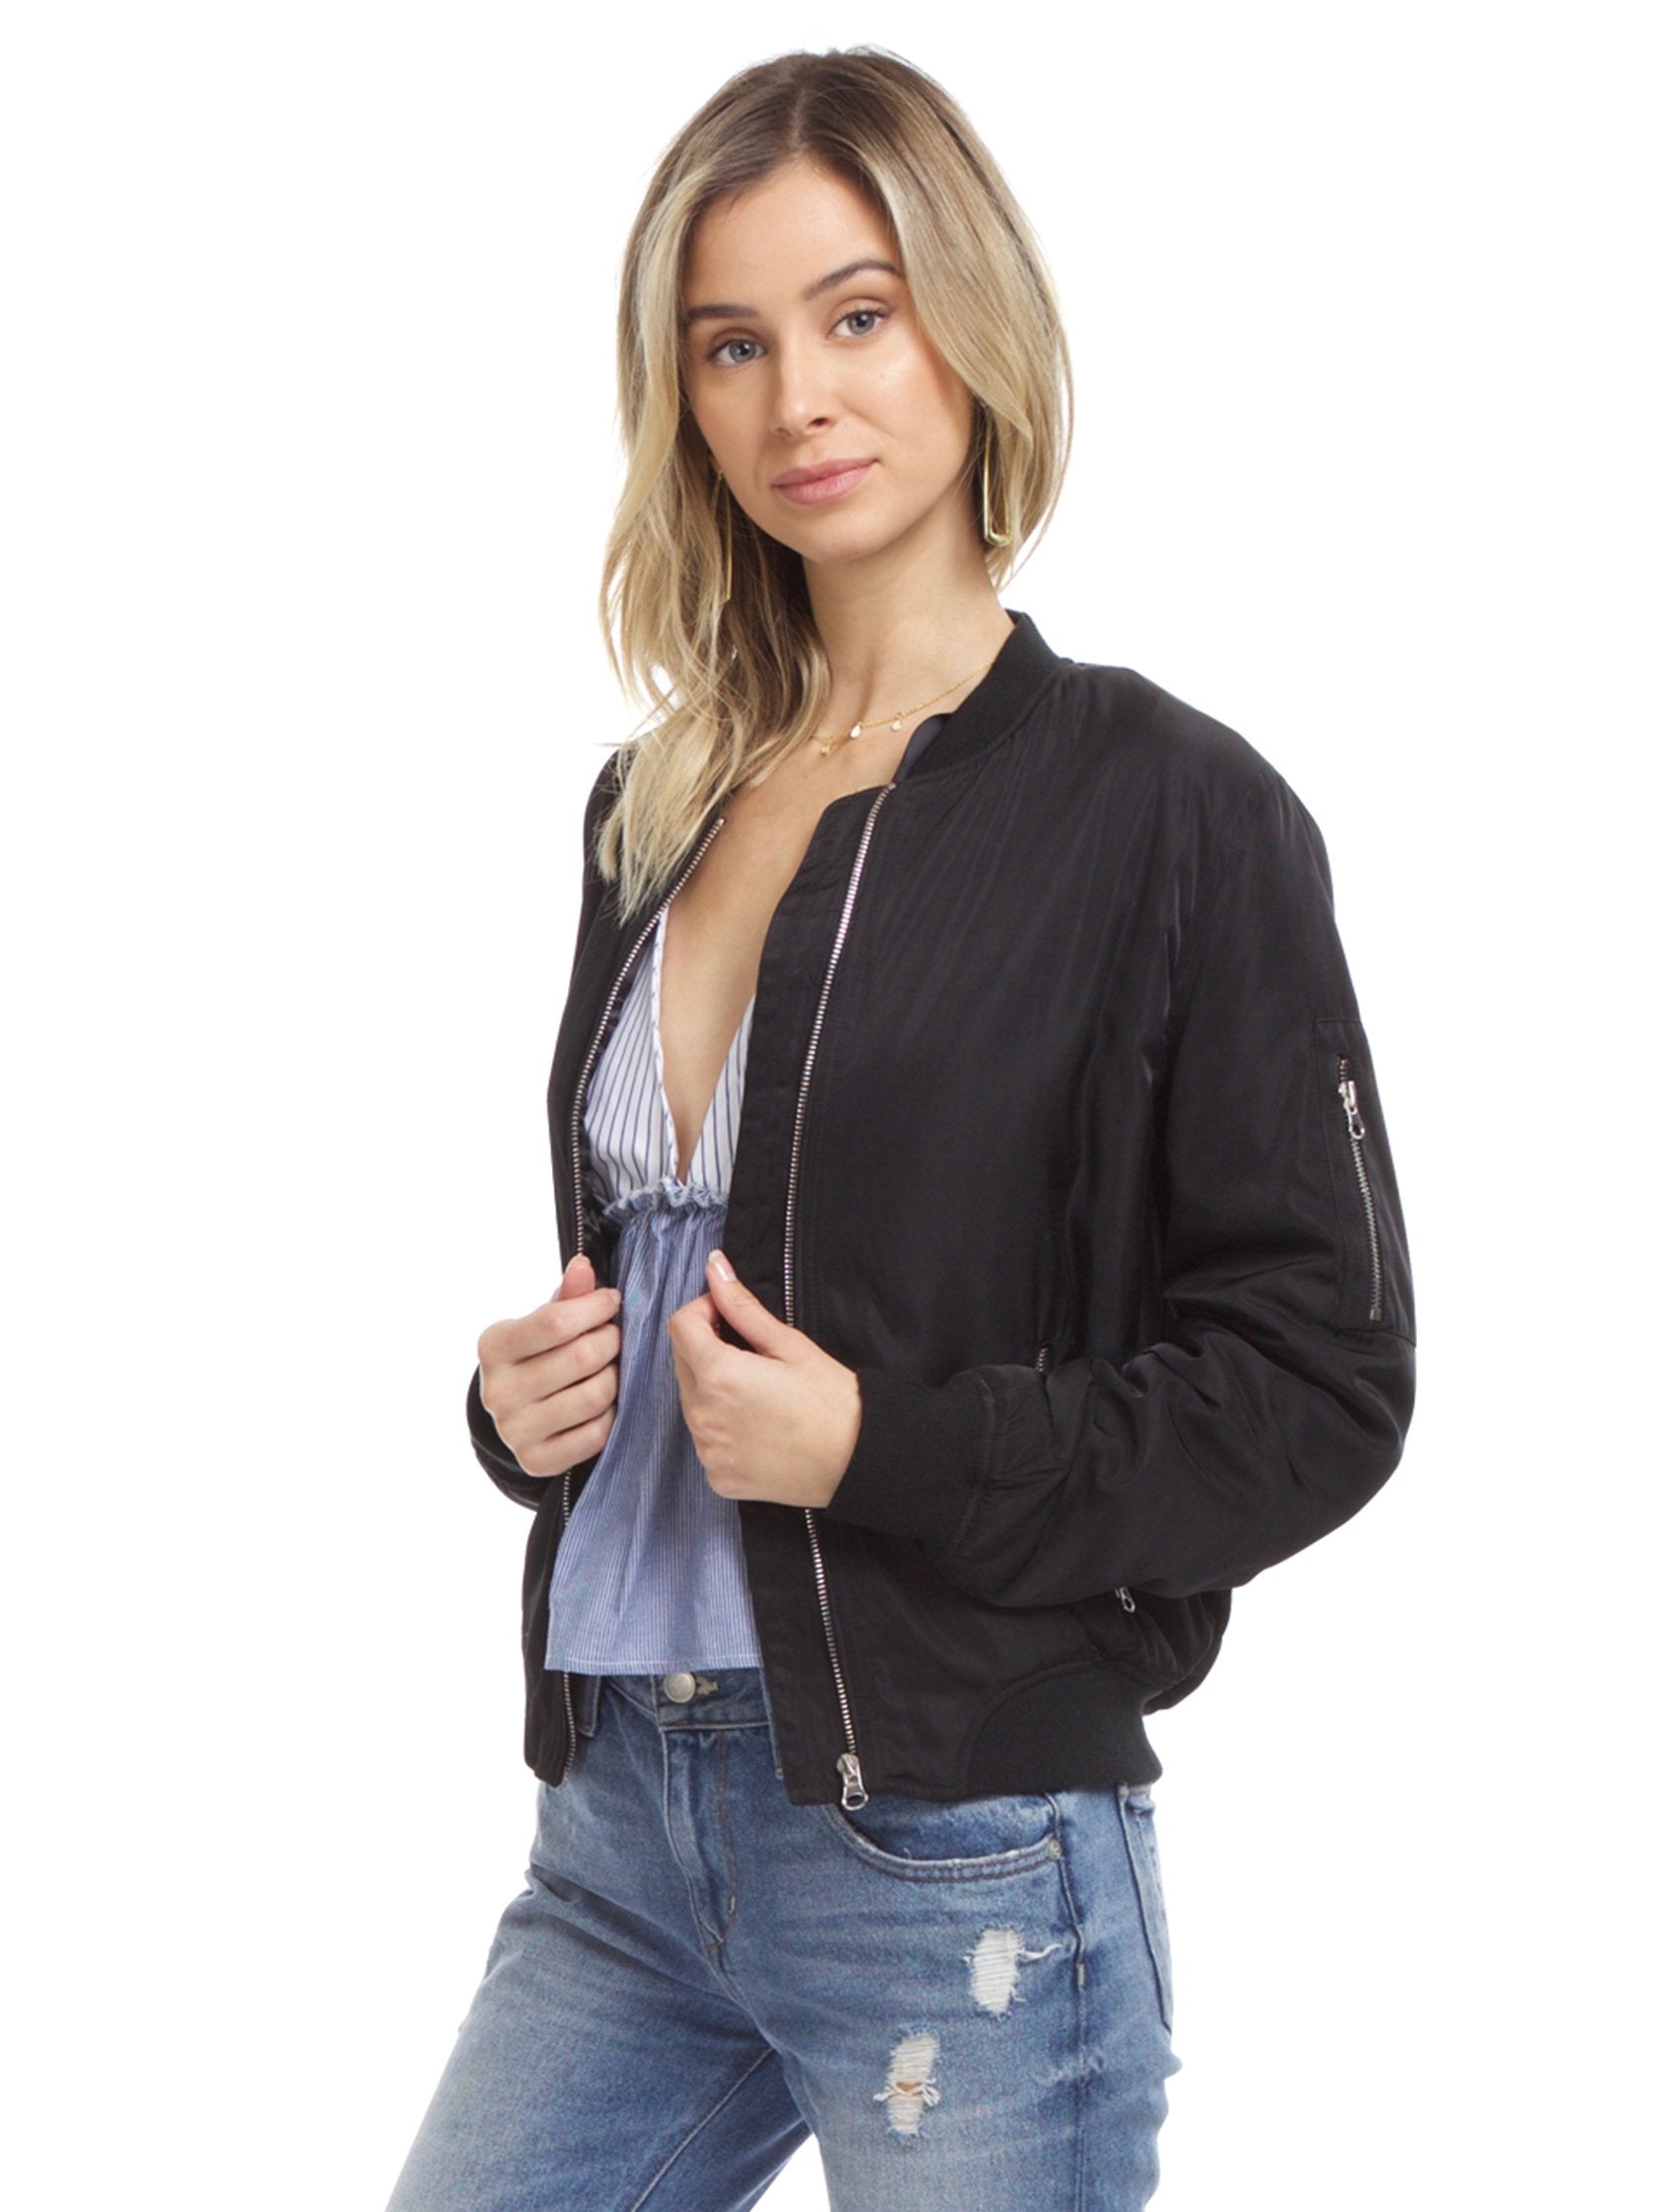 Women wearing a jacket rental from Lush called Zip Up Bomber Jacket